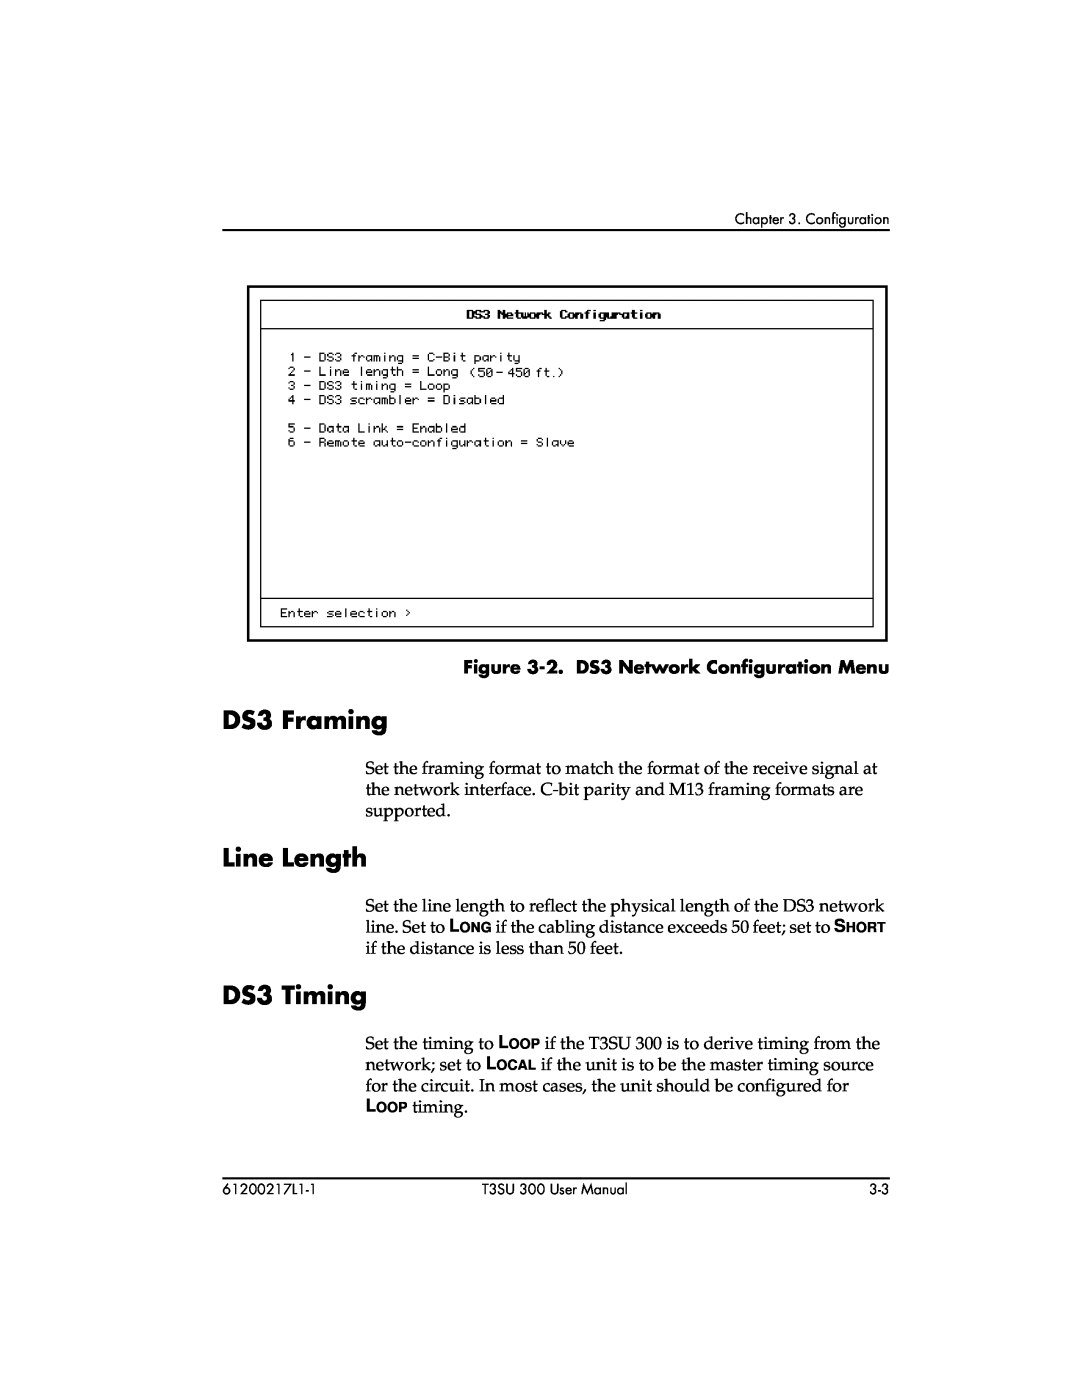 ADTRAN T3SU 300 user manual DS3 Framing, Line Length, DS3 Timing, 2. DS3 Network Configuration Menu 